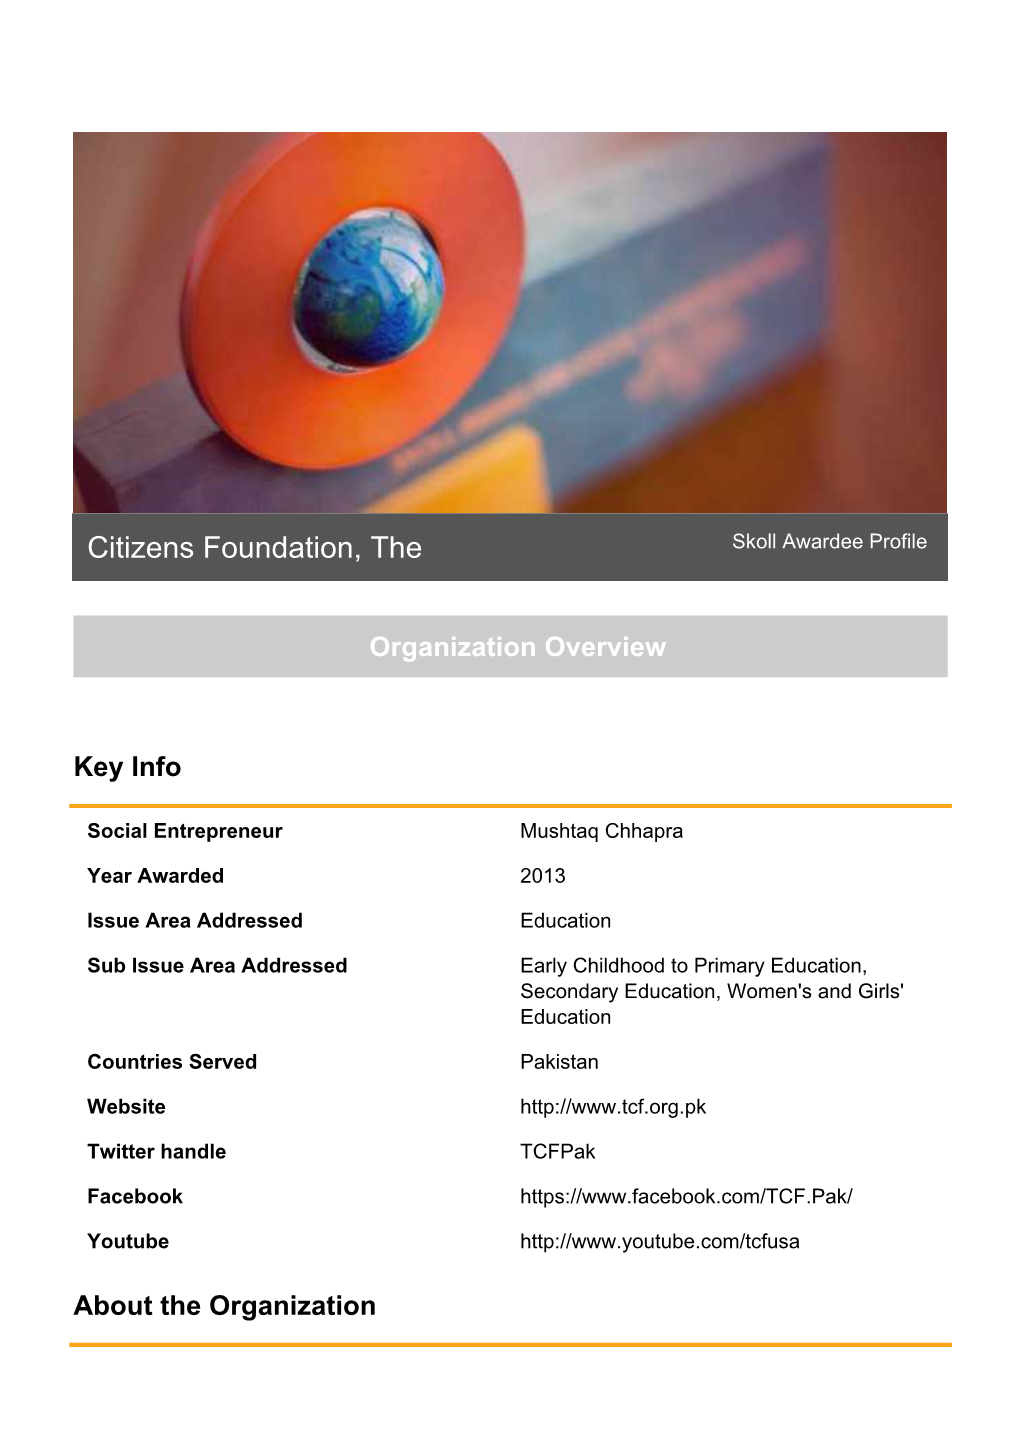 Citizens Foundation, the Skoll Awardee Profile